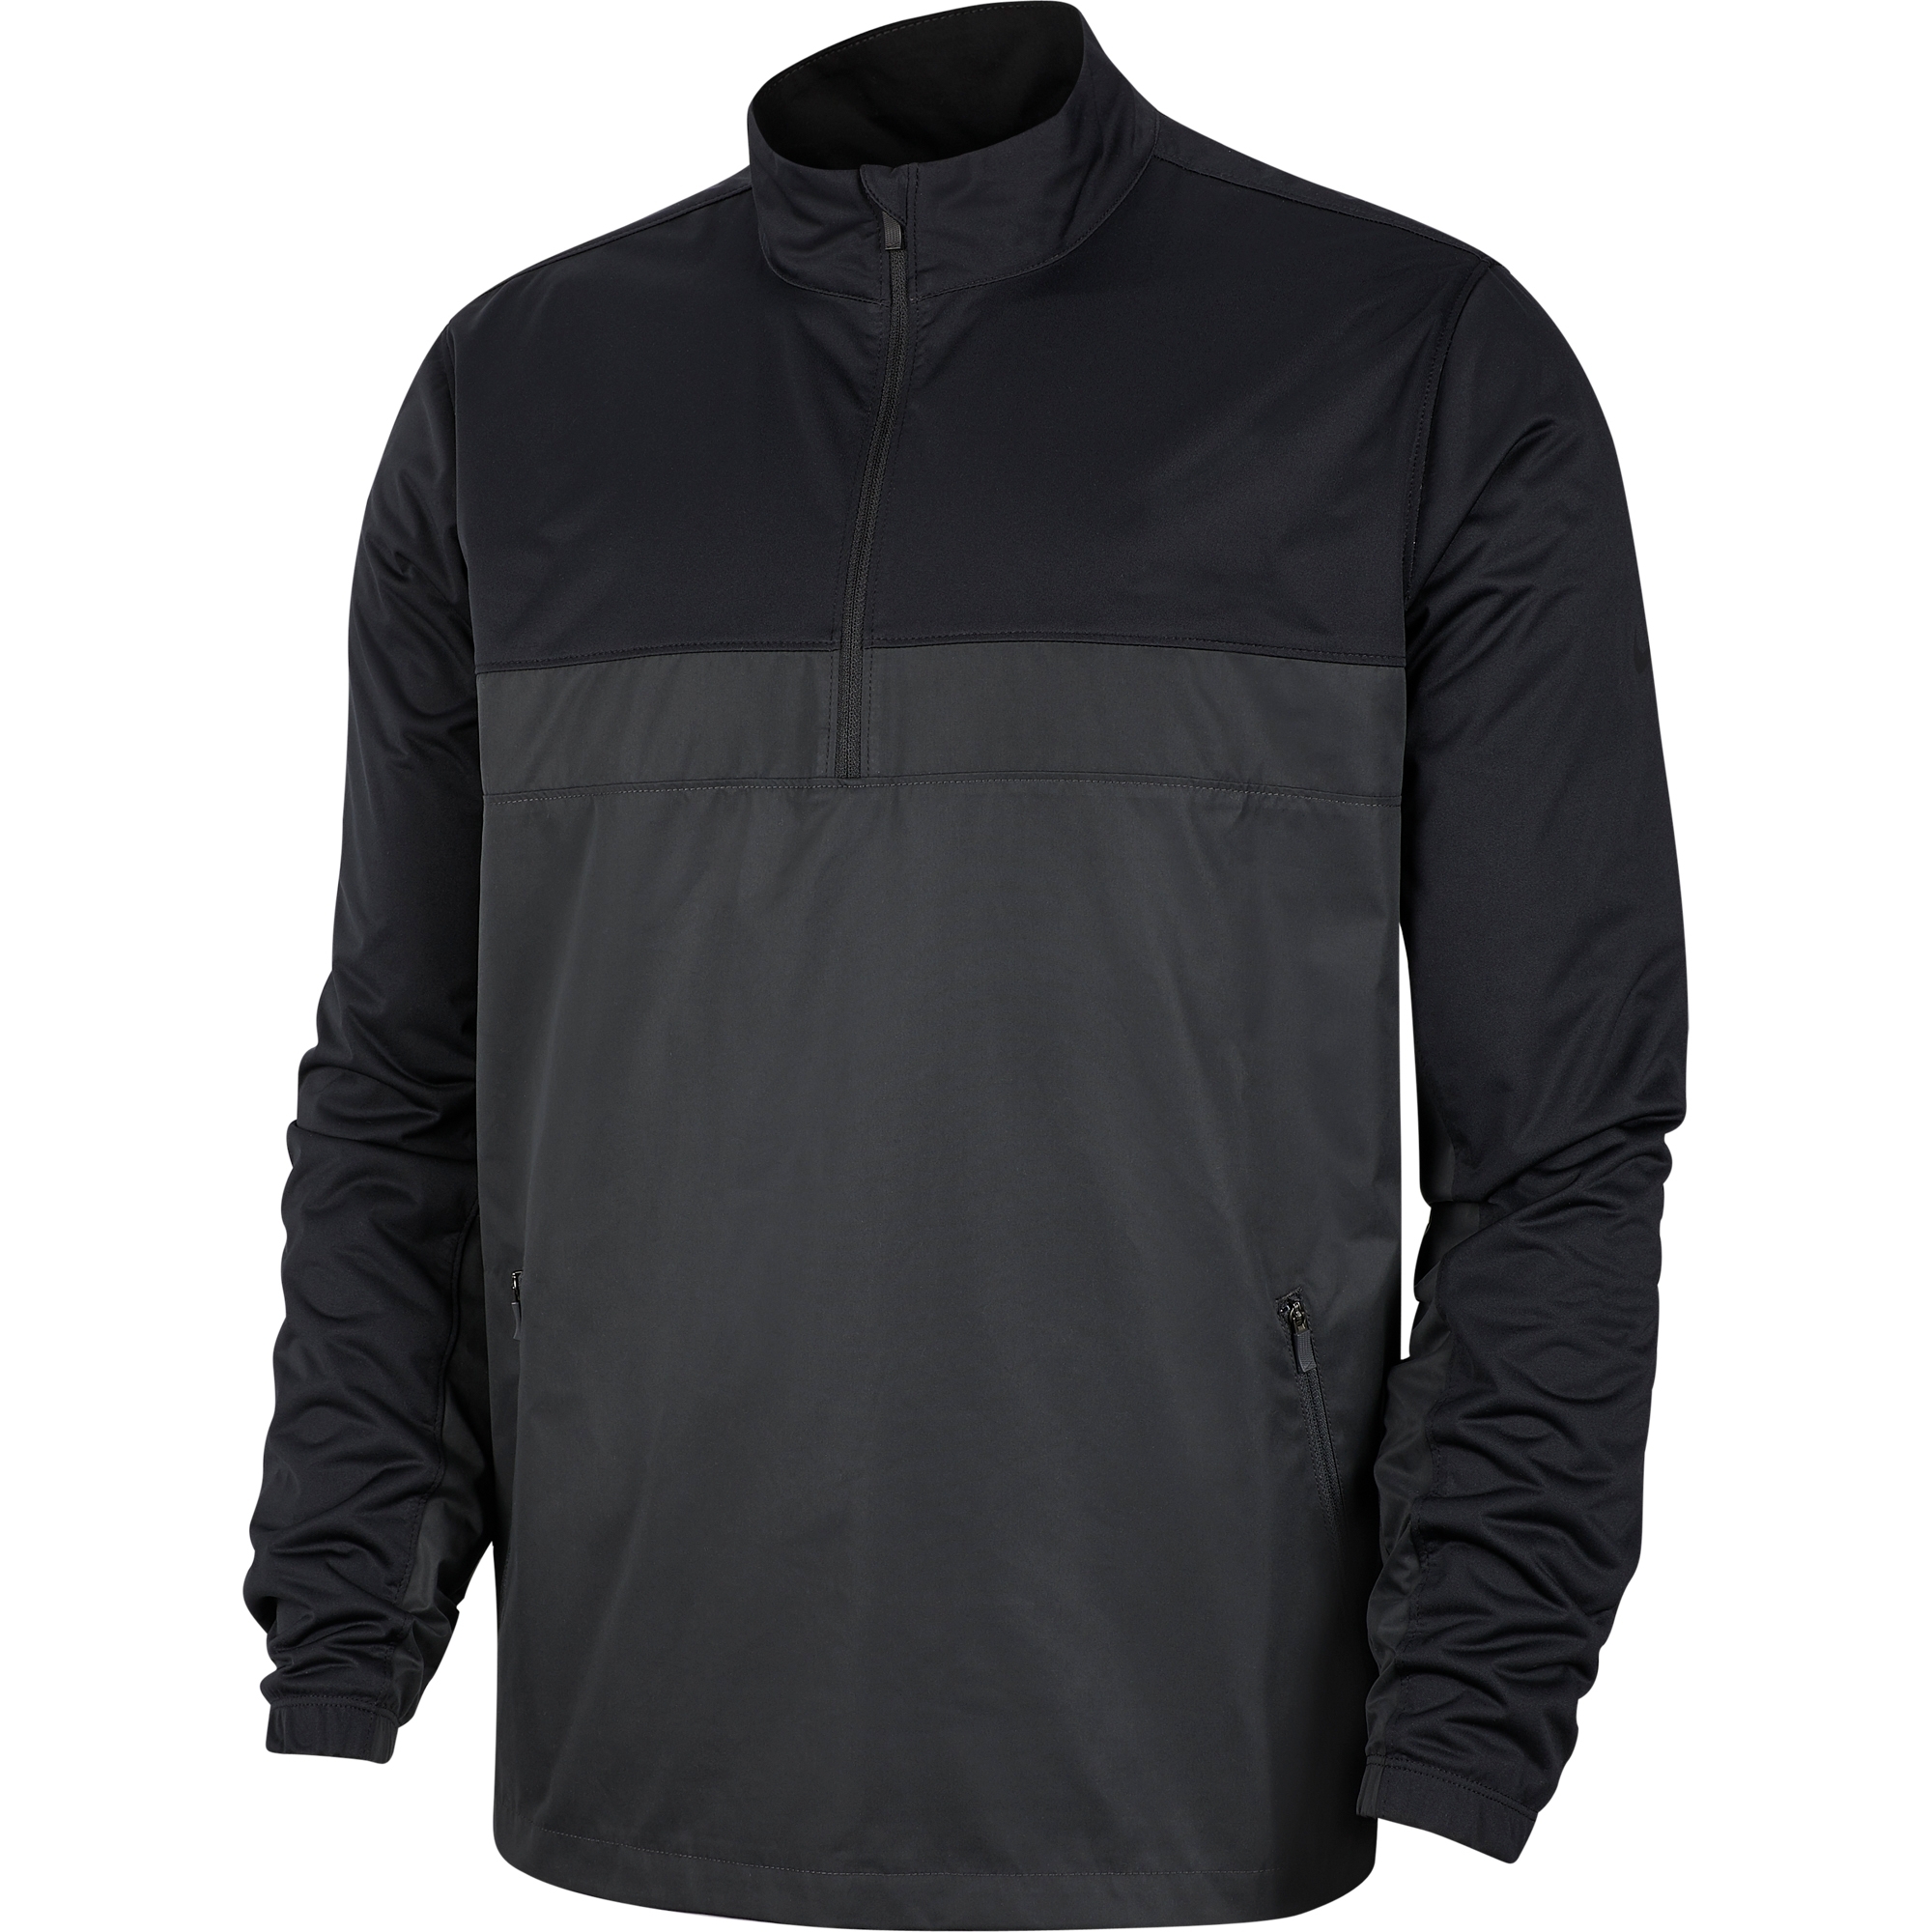 Nike Mens Shield Water Resistent Half Zip Golf Jacket S- Chest 35-37.5